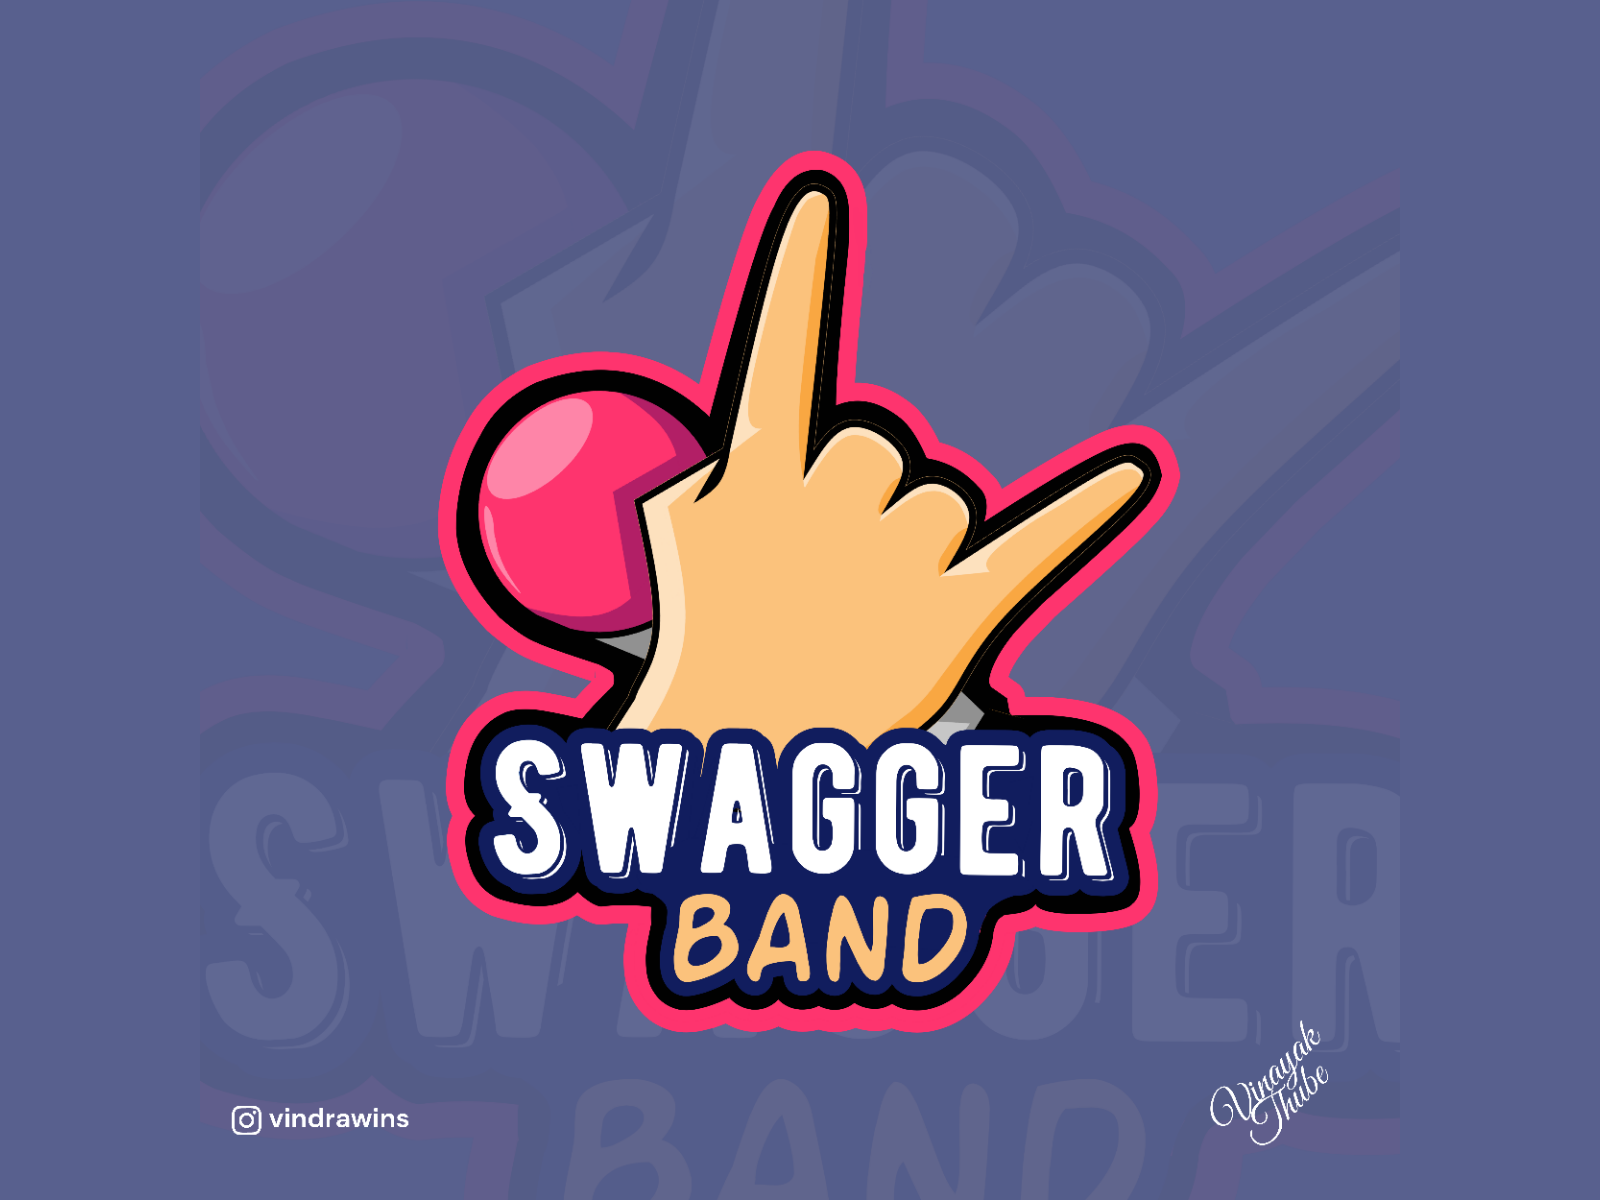 swagger logo wallpaper